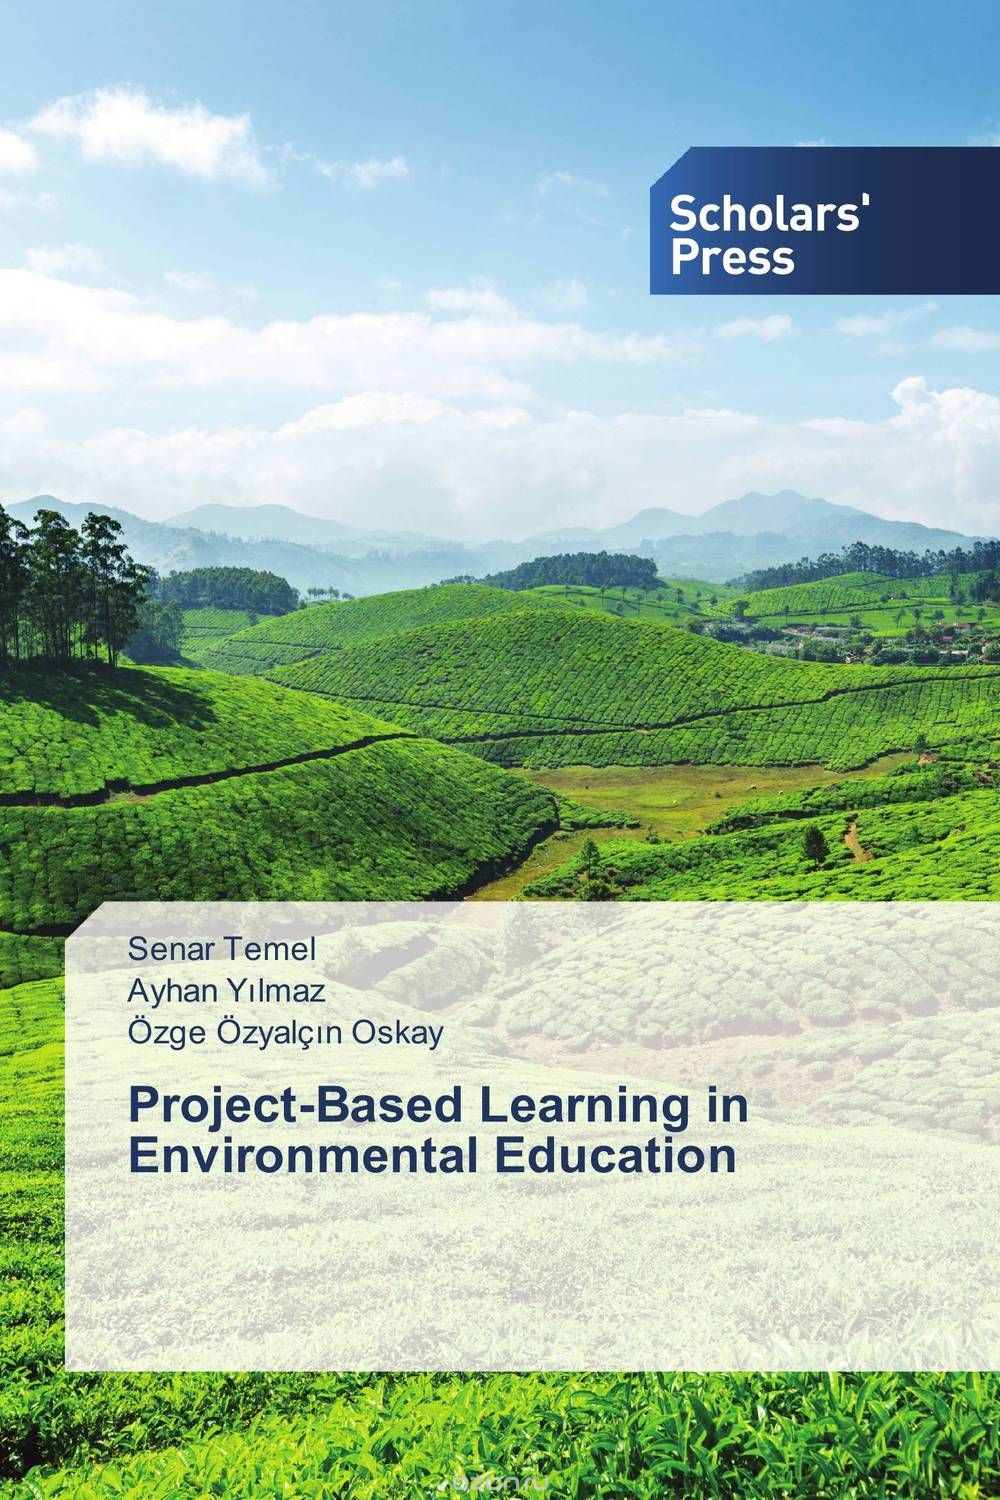 Скачать книгу "Project-Based Learning in Environmental Education"